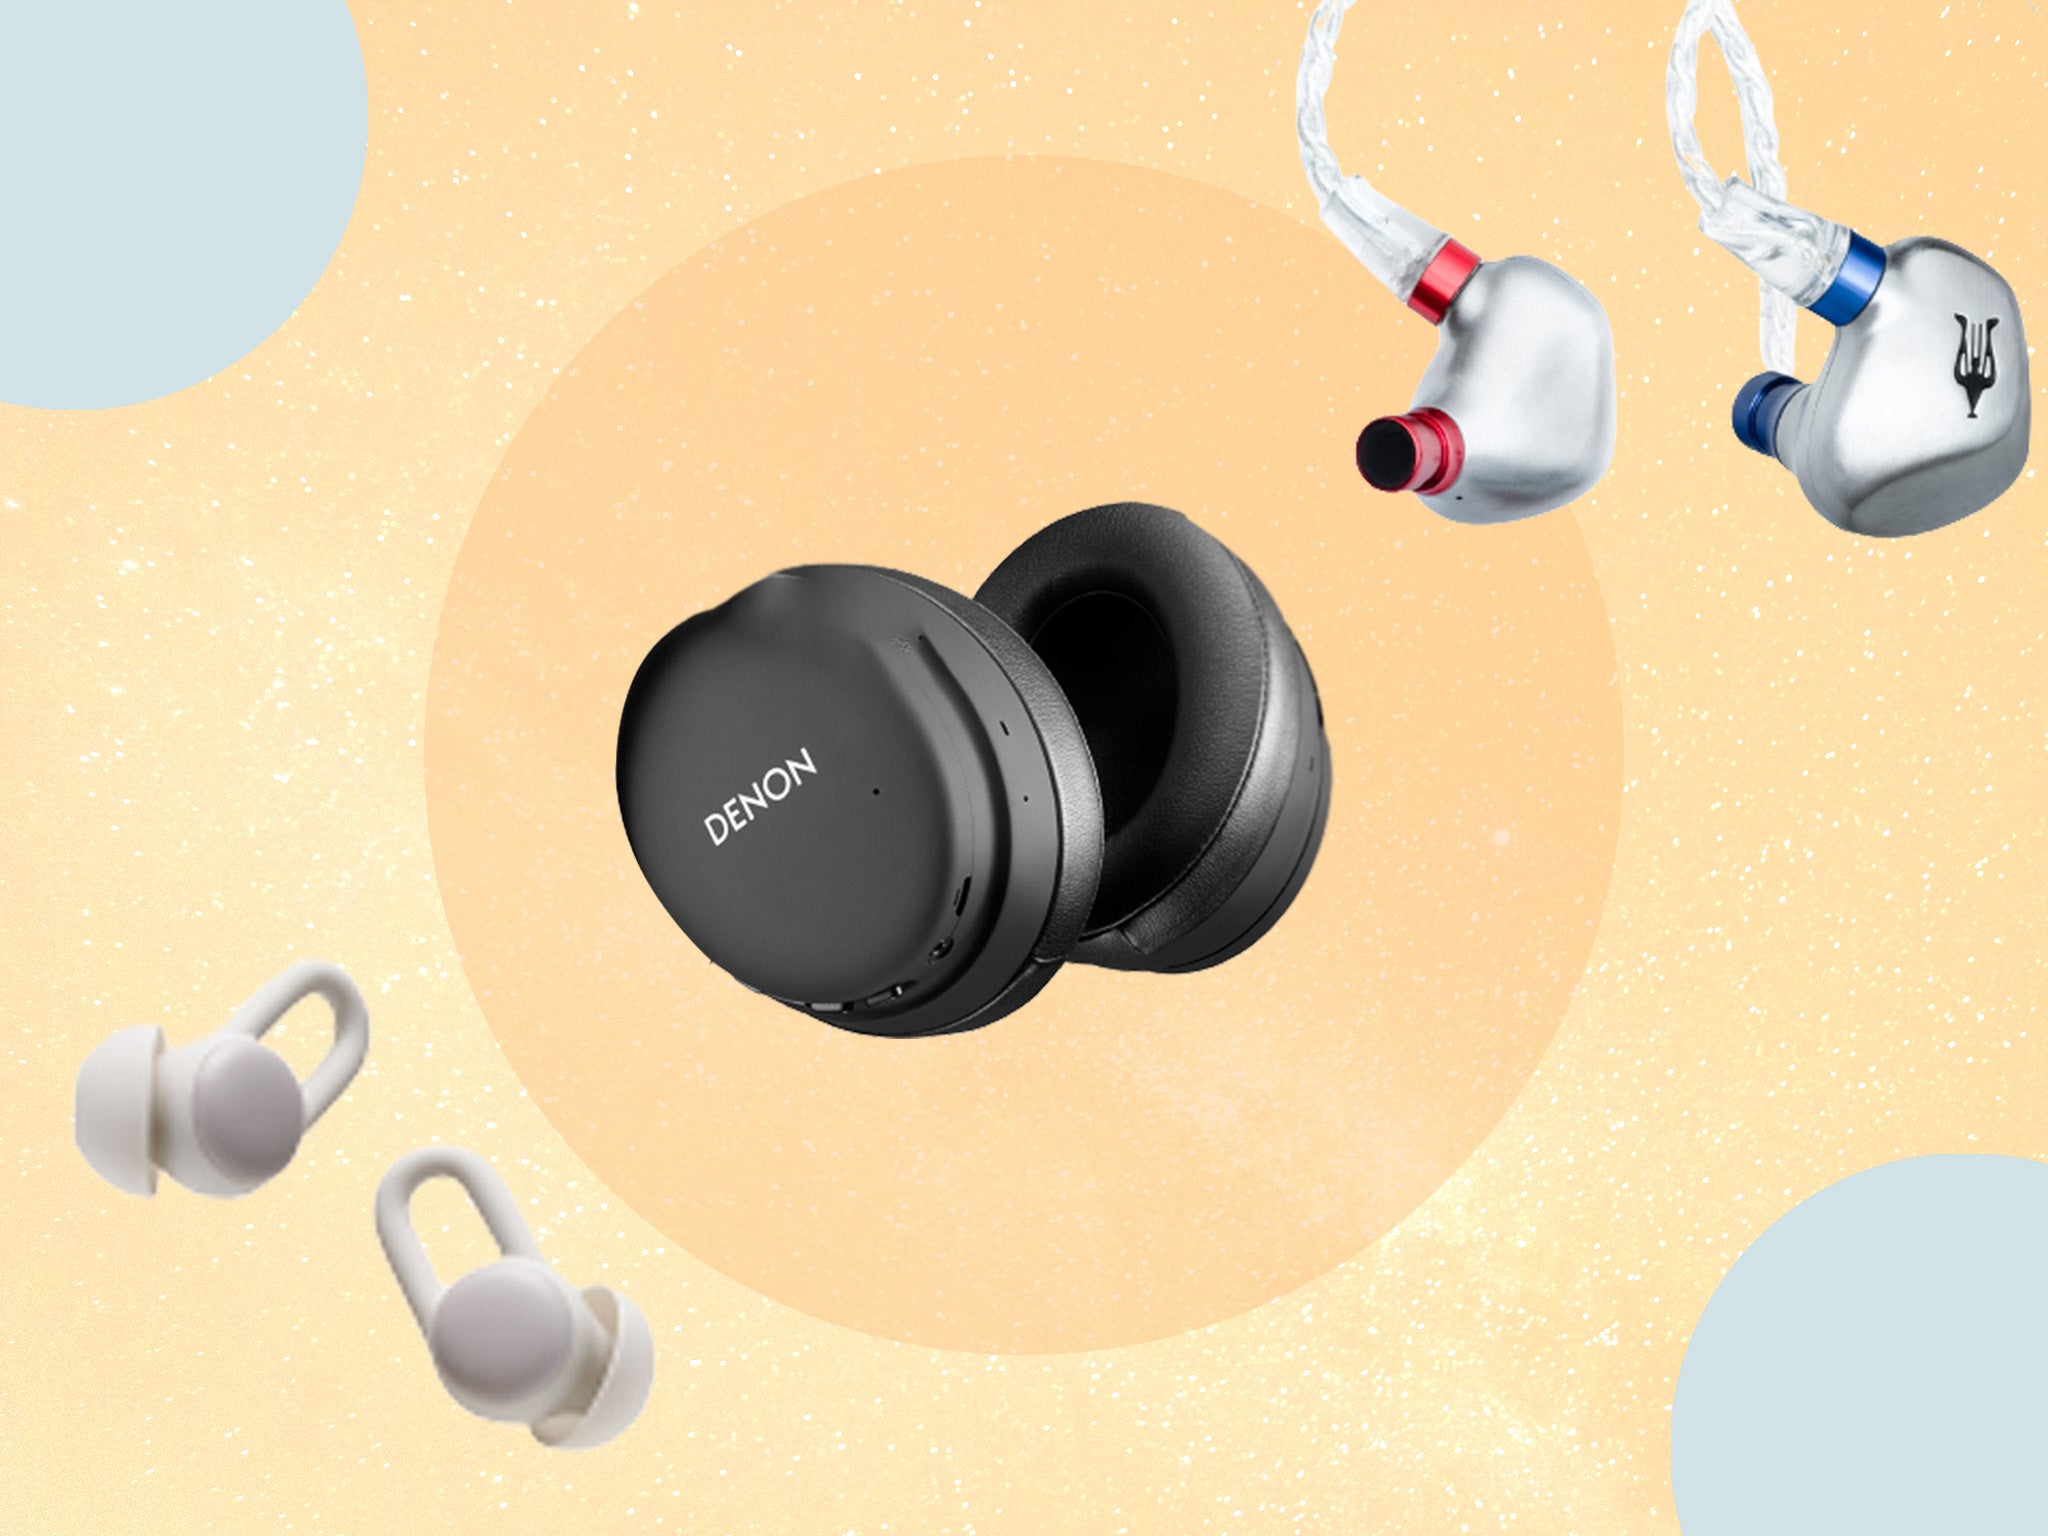 MAXROCK Wireless Sleeping Headphones Noise Blocking Neckband Sleep Earplug Earbuds Bluetooth 4.1，Quick Charge Wireless Sleep Headsets for Insomnia Relaxation and Sports Side Sleeper Snoring 